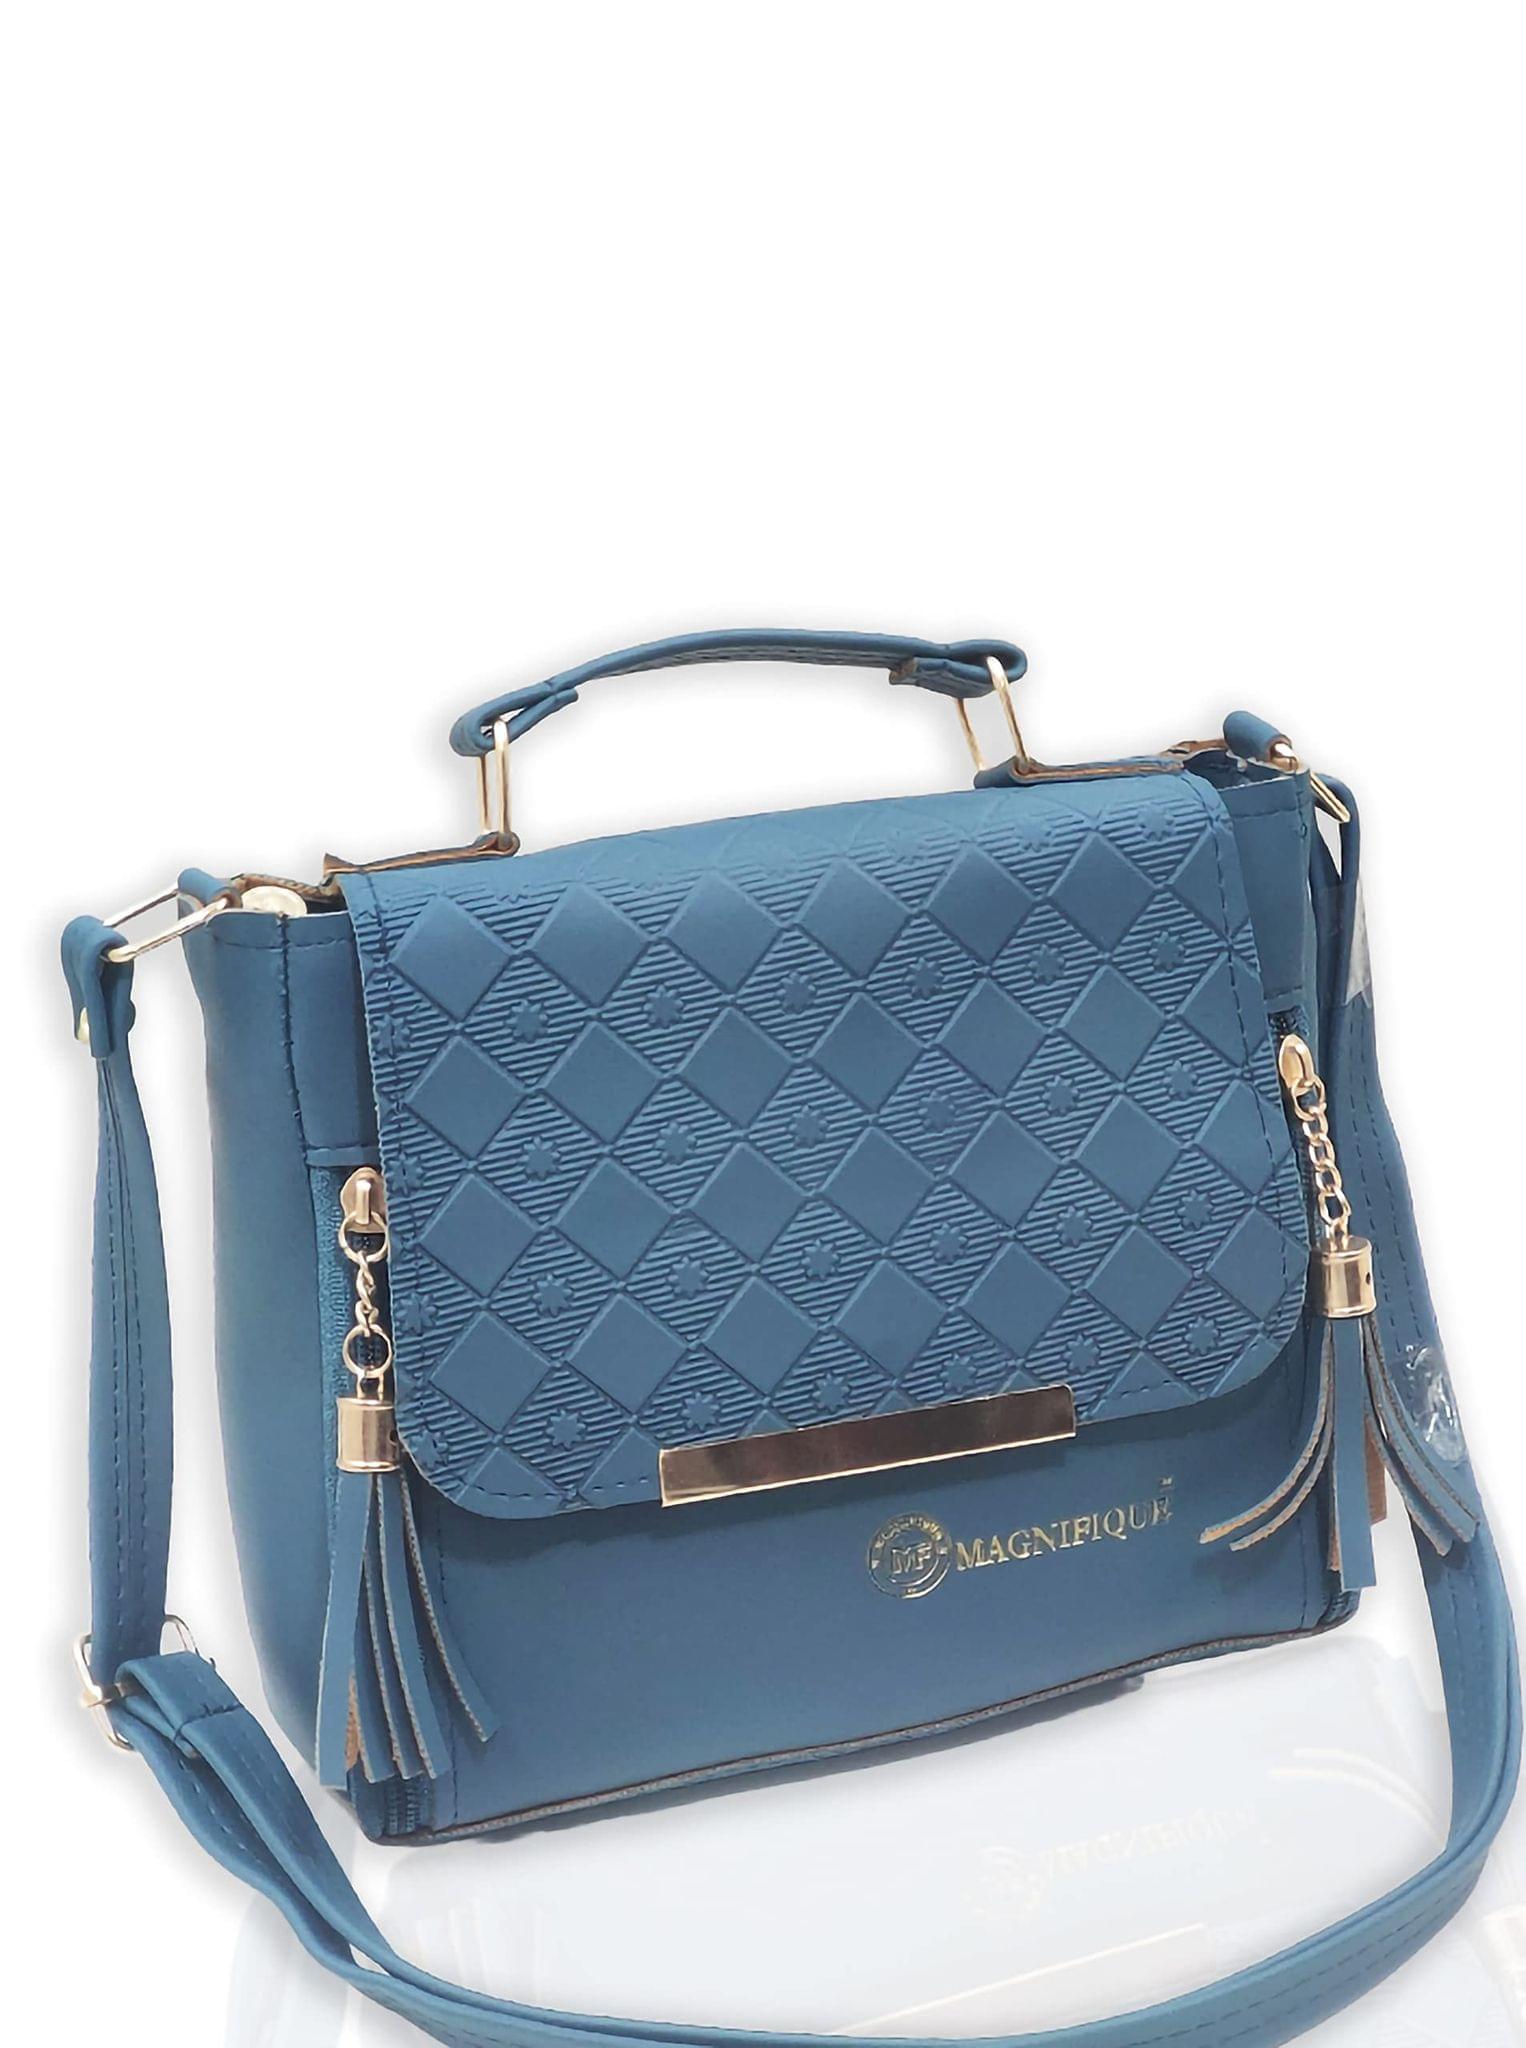 Higher Quality, Durable American Darling Handbags & Wallets Westerly  Metallic Teal & Fringe Crossbody Handbag - Cinchycowgirls.com